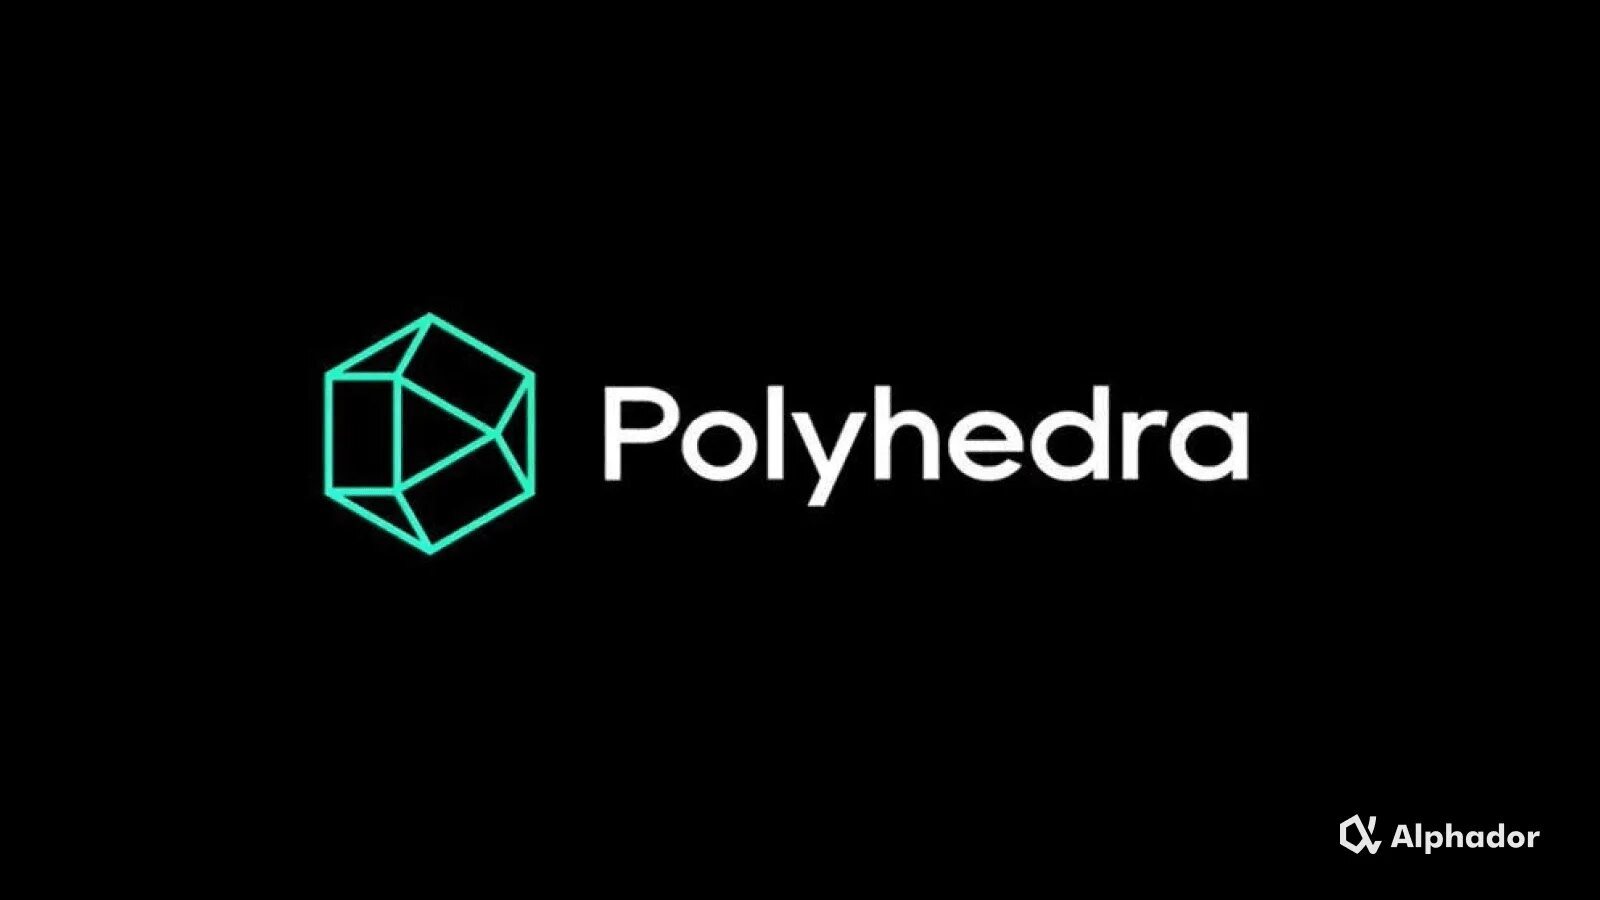 Polyhedra zkbridge. Polyhedra Network. Polyhedra Network лого. Polyhedra лого. Alphador